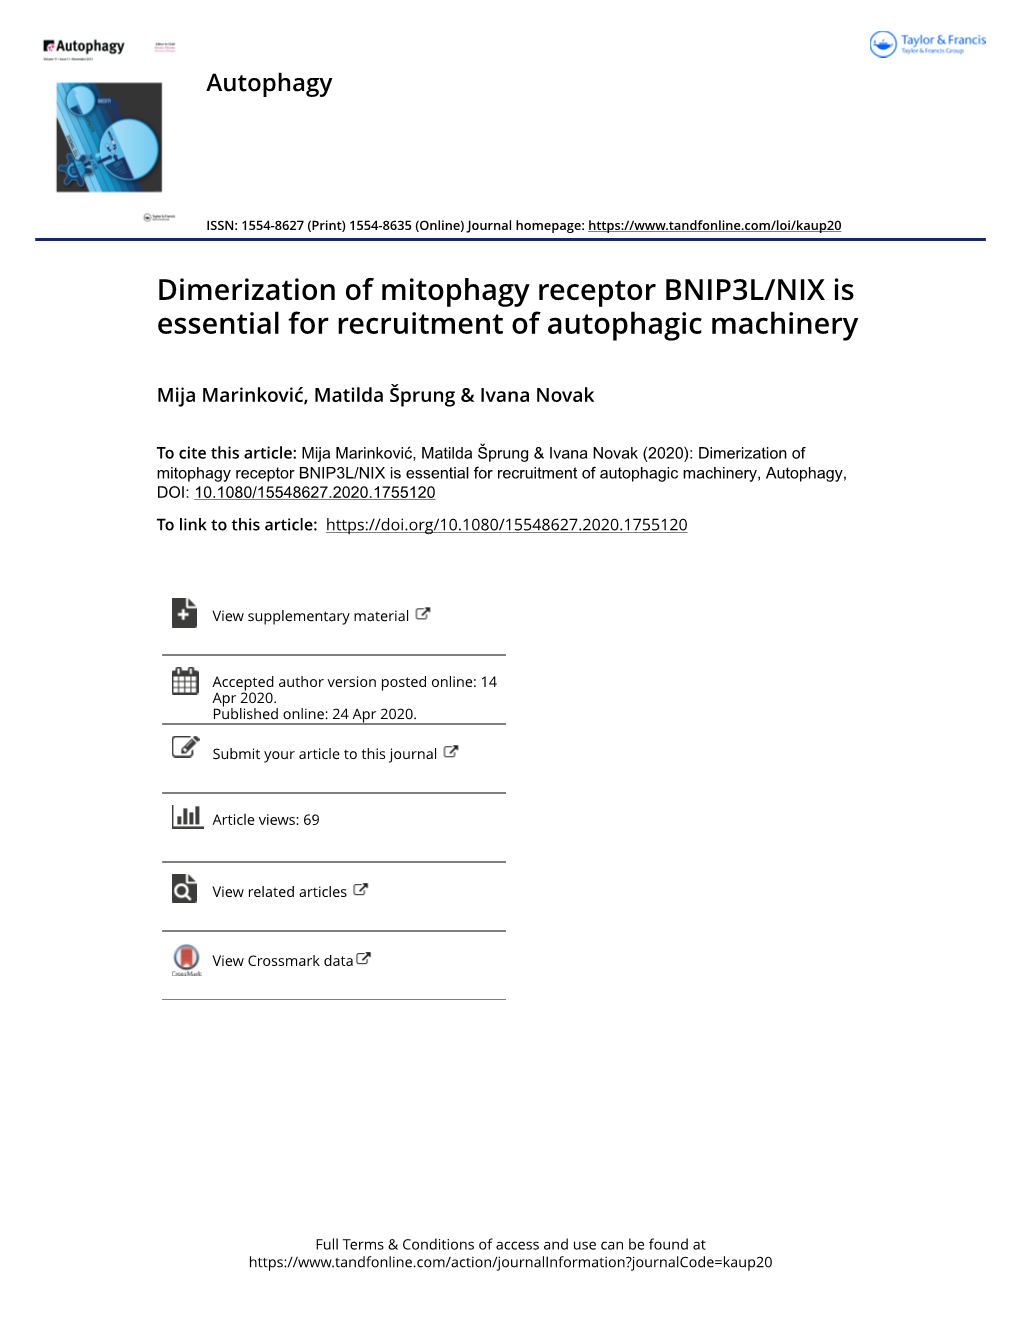 Dimerization of Mitophagy Receptor BNIP3L/NIX Is Essential for Recruitment of Autophagic Machinery